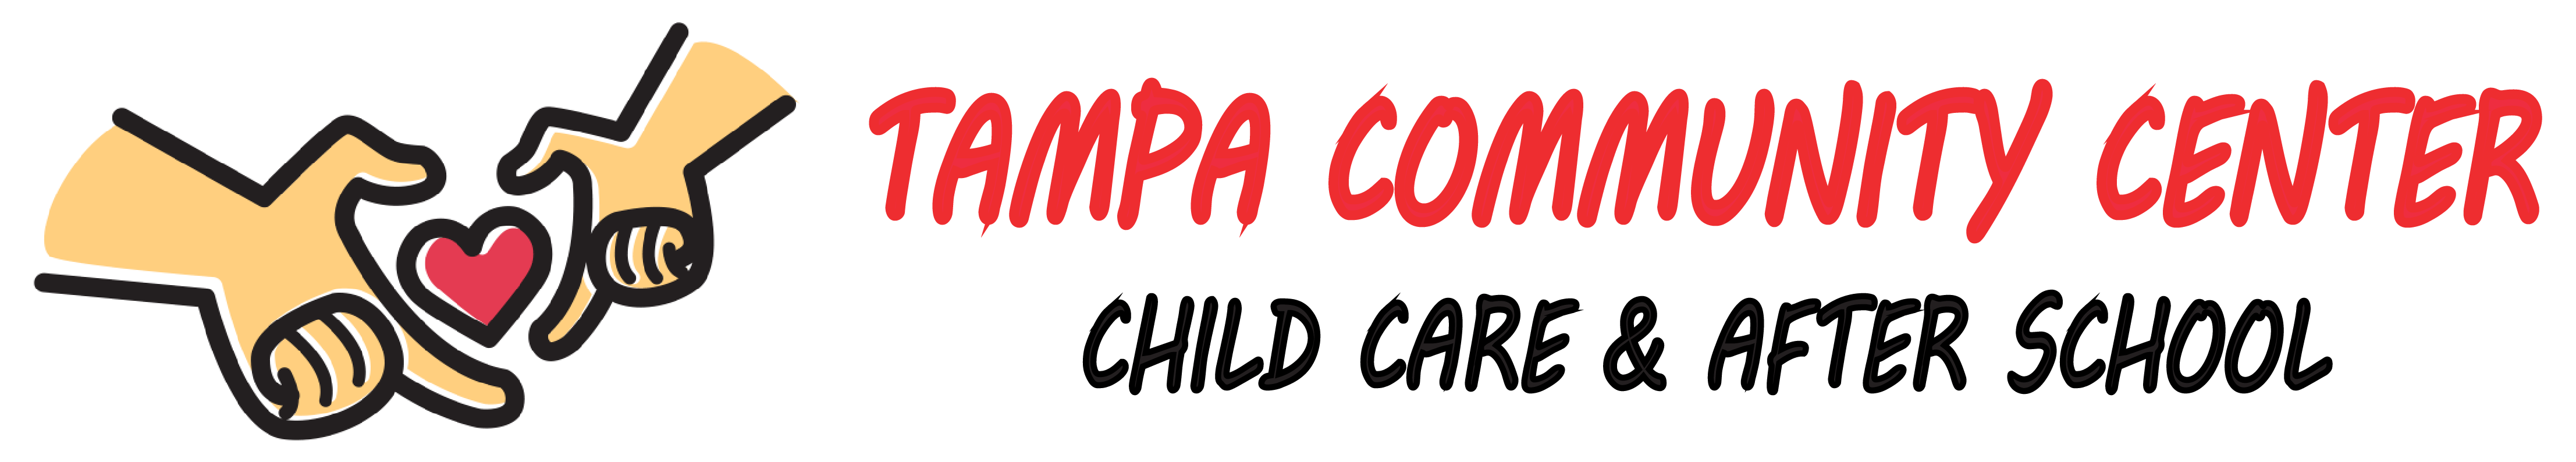 Tampa Community Center